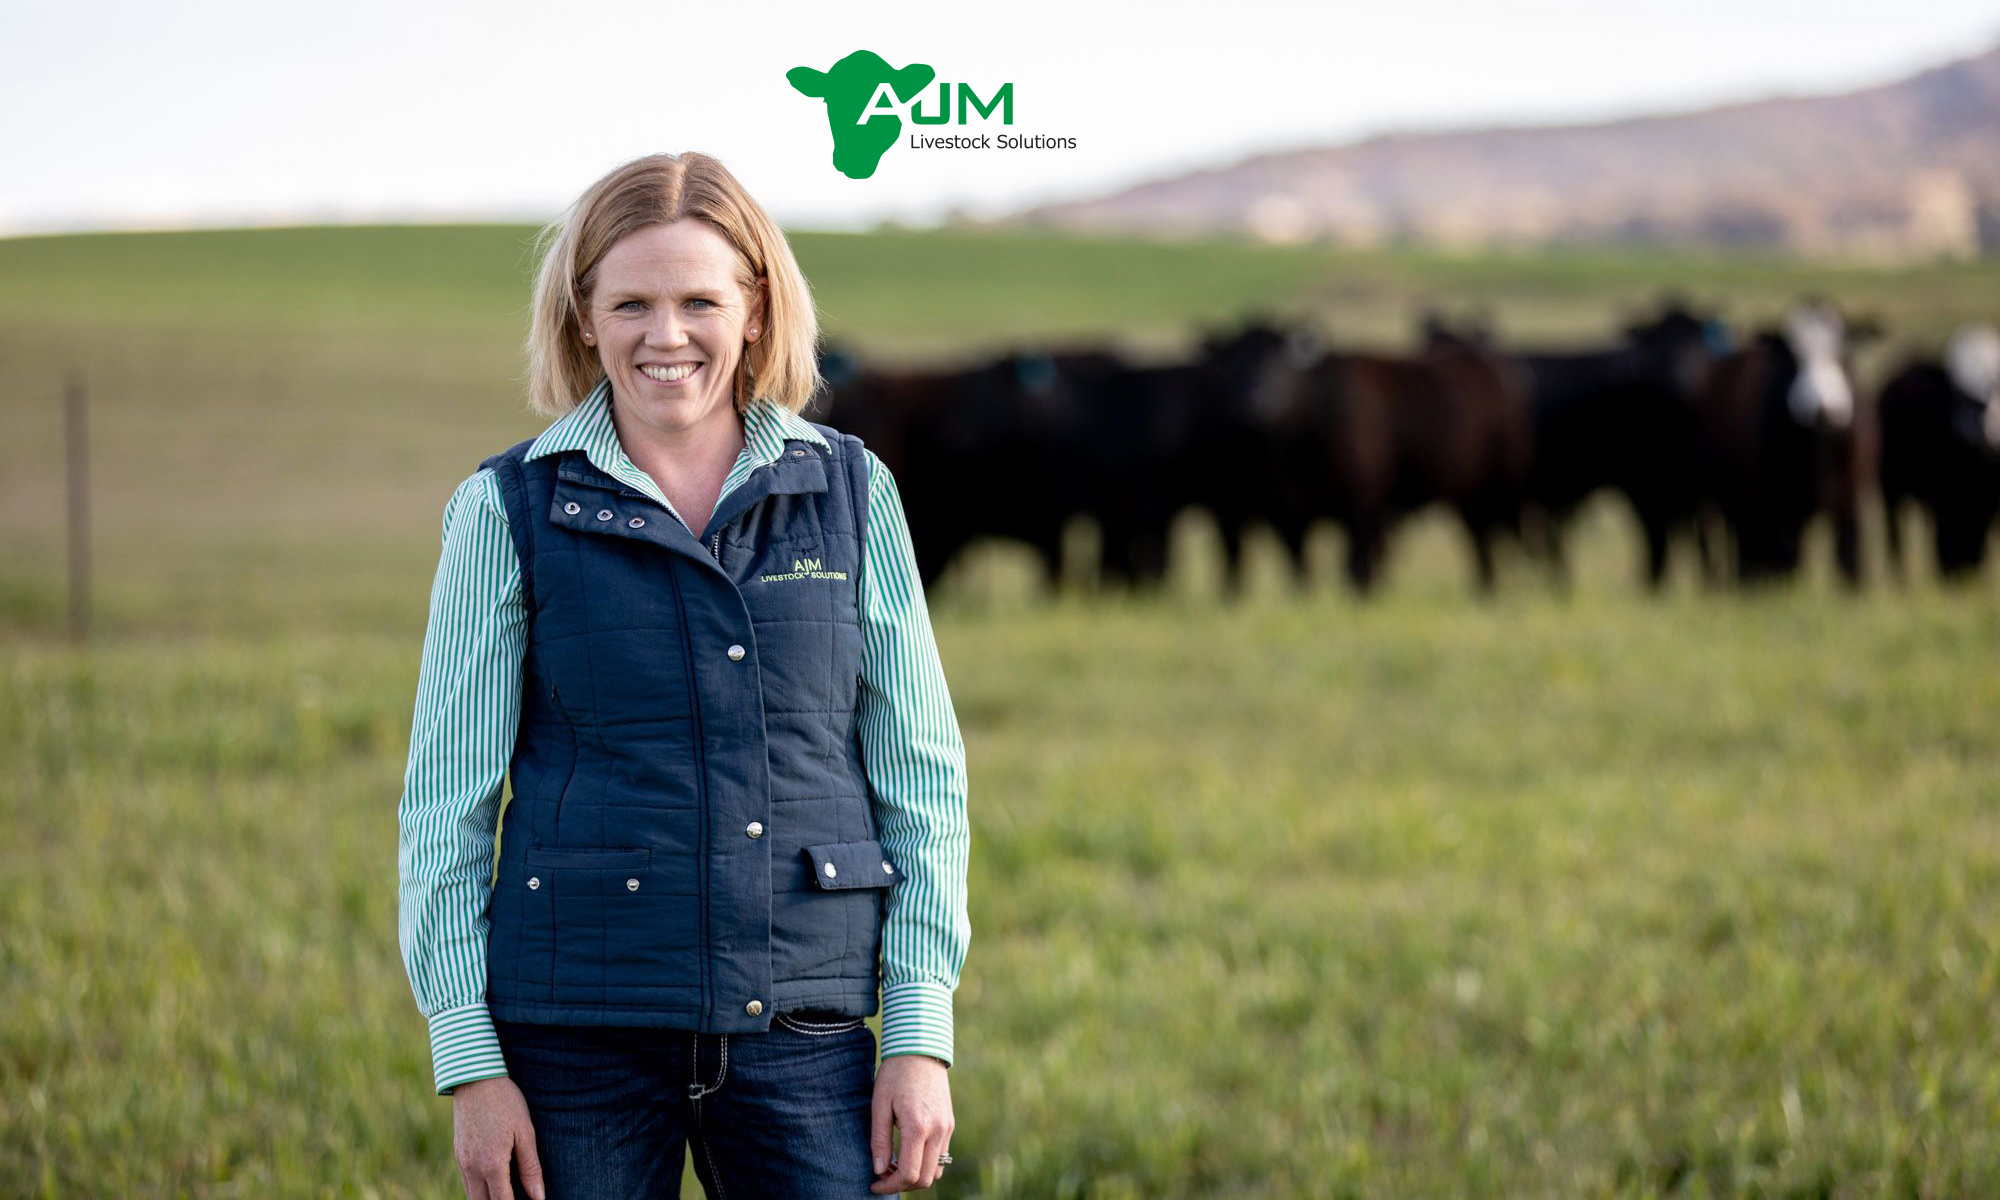 Member case study: Alison MacIntosh, AJM Livestock Solutions